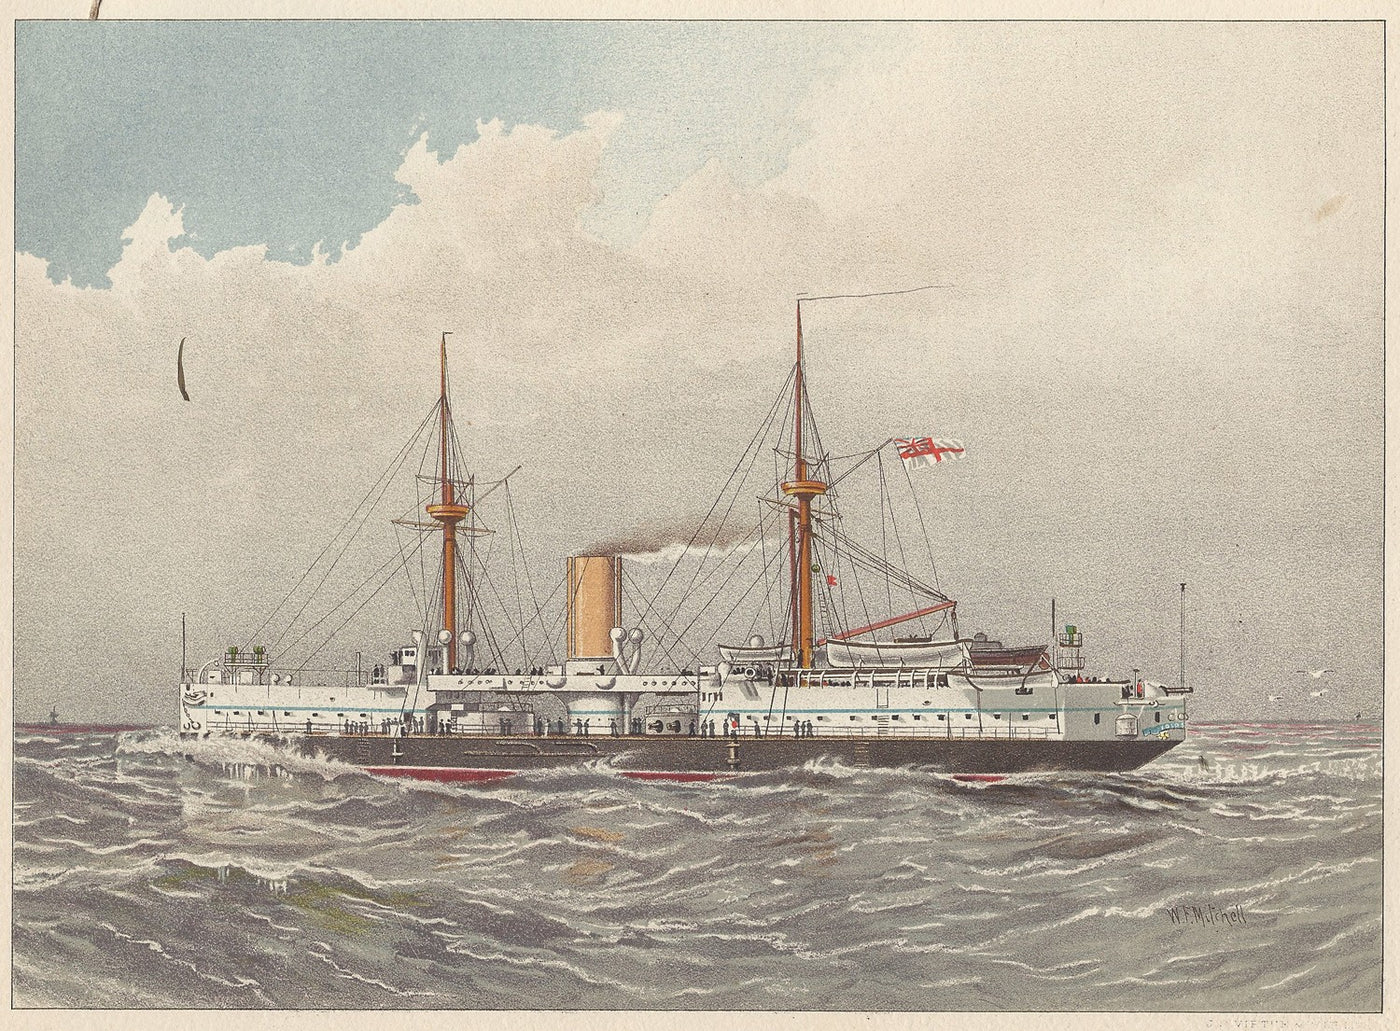 HMS Colossus 1st Class Battleship antique print published 1890